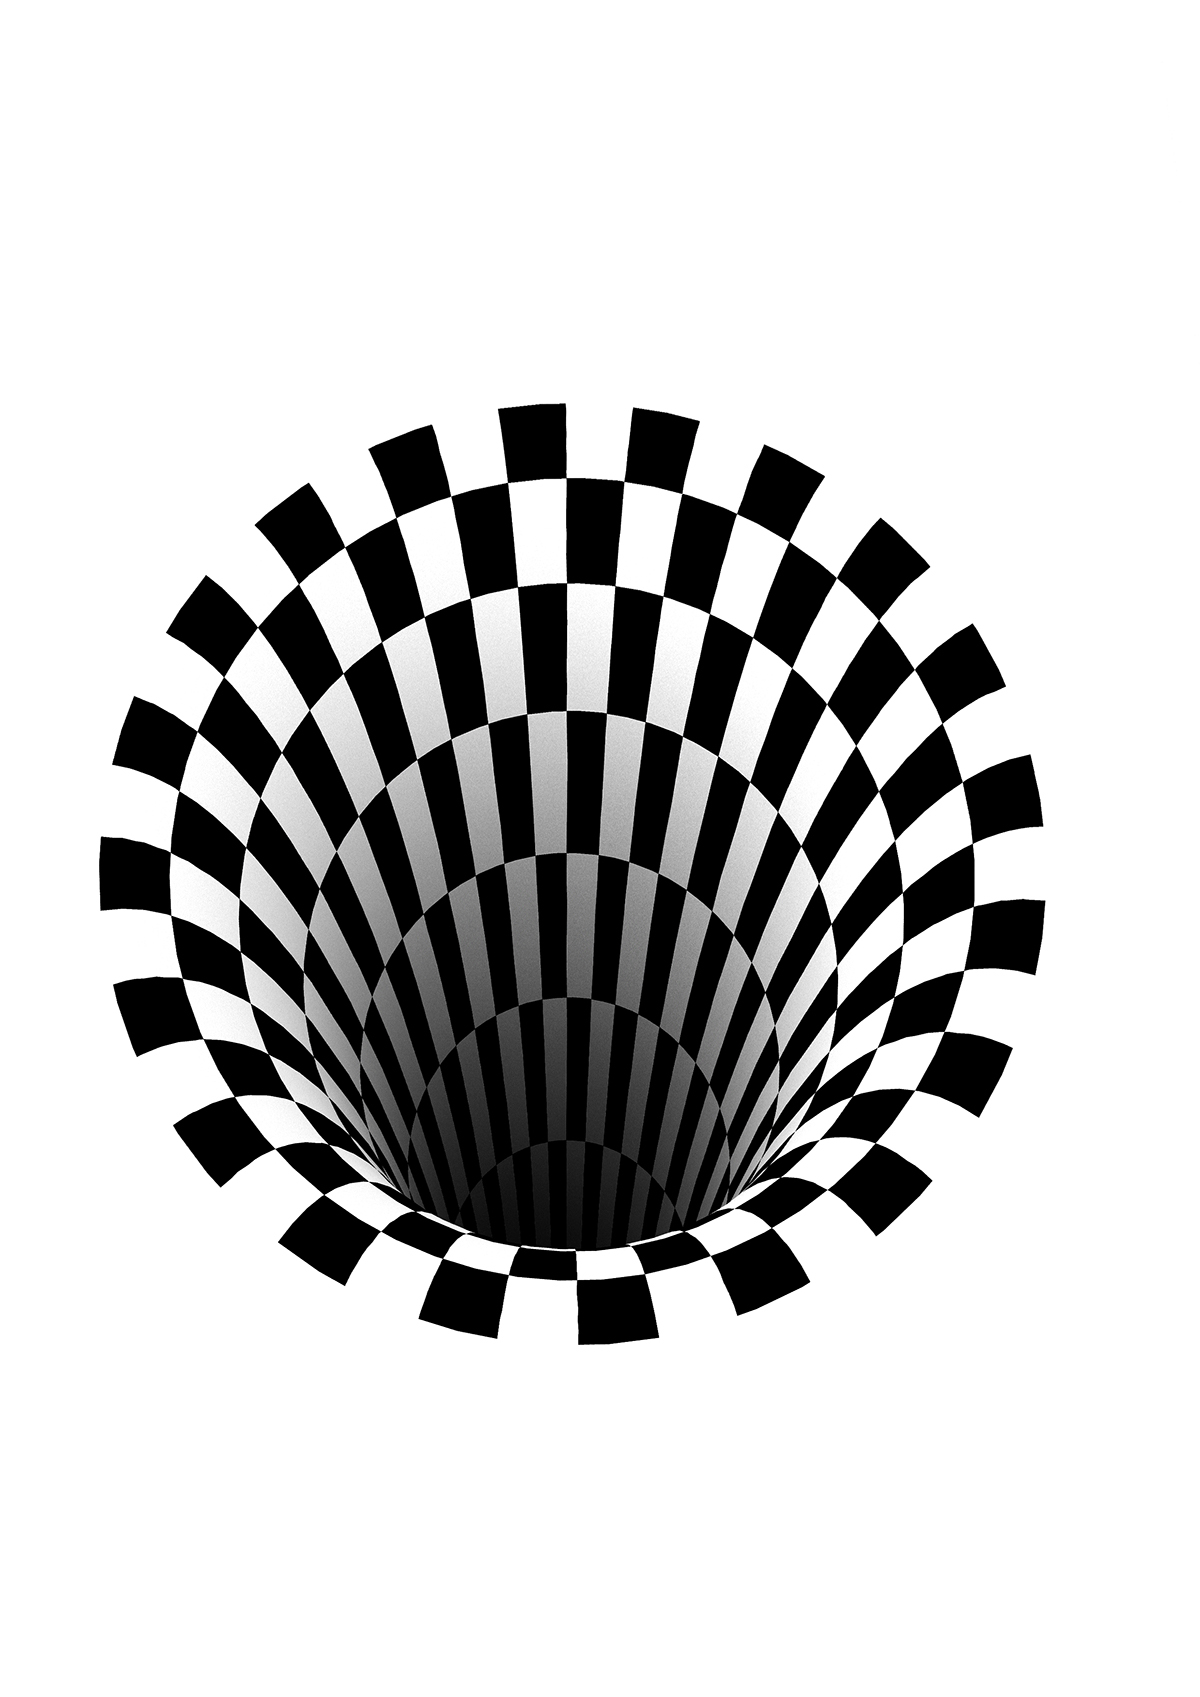 Adobe Portfolio illusion Rug design black hole creative